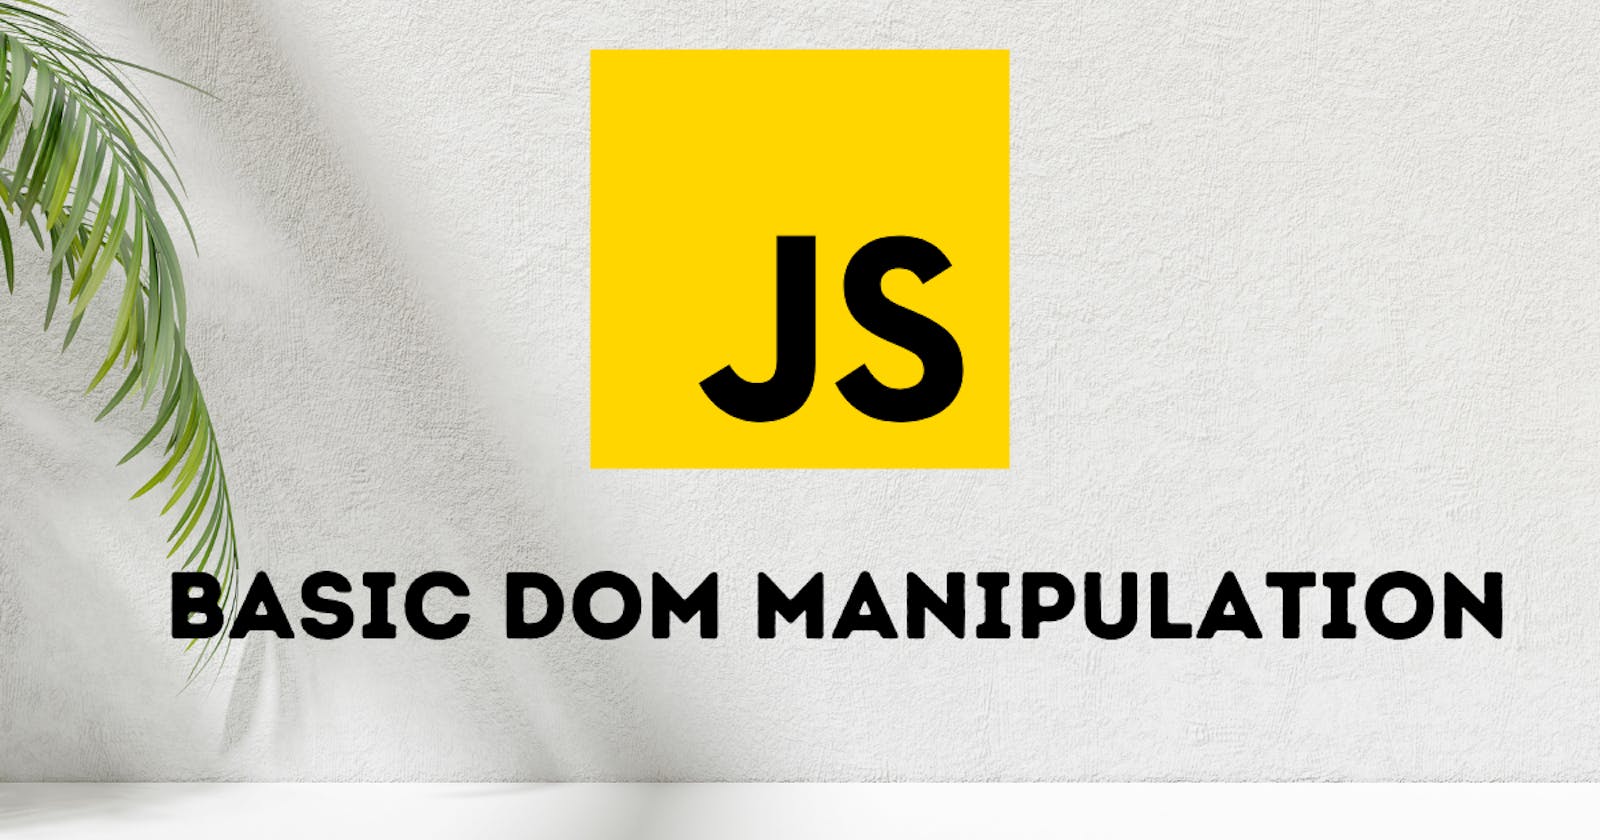 Basic DOM Manipulation: Manipulating HTML elements using JavaScript.